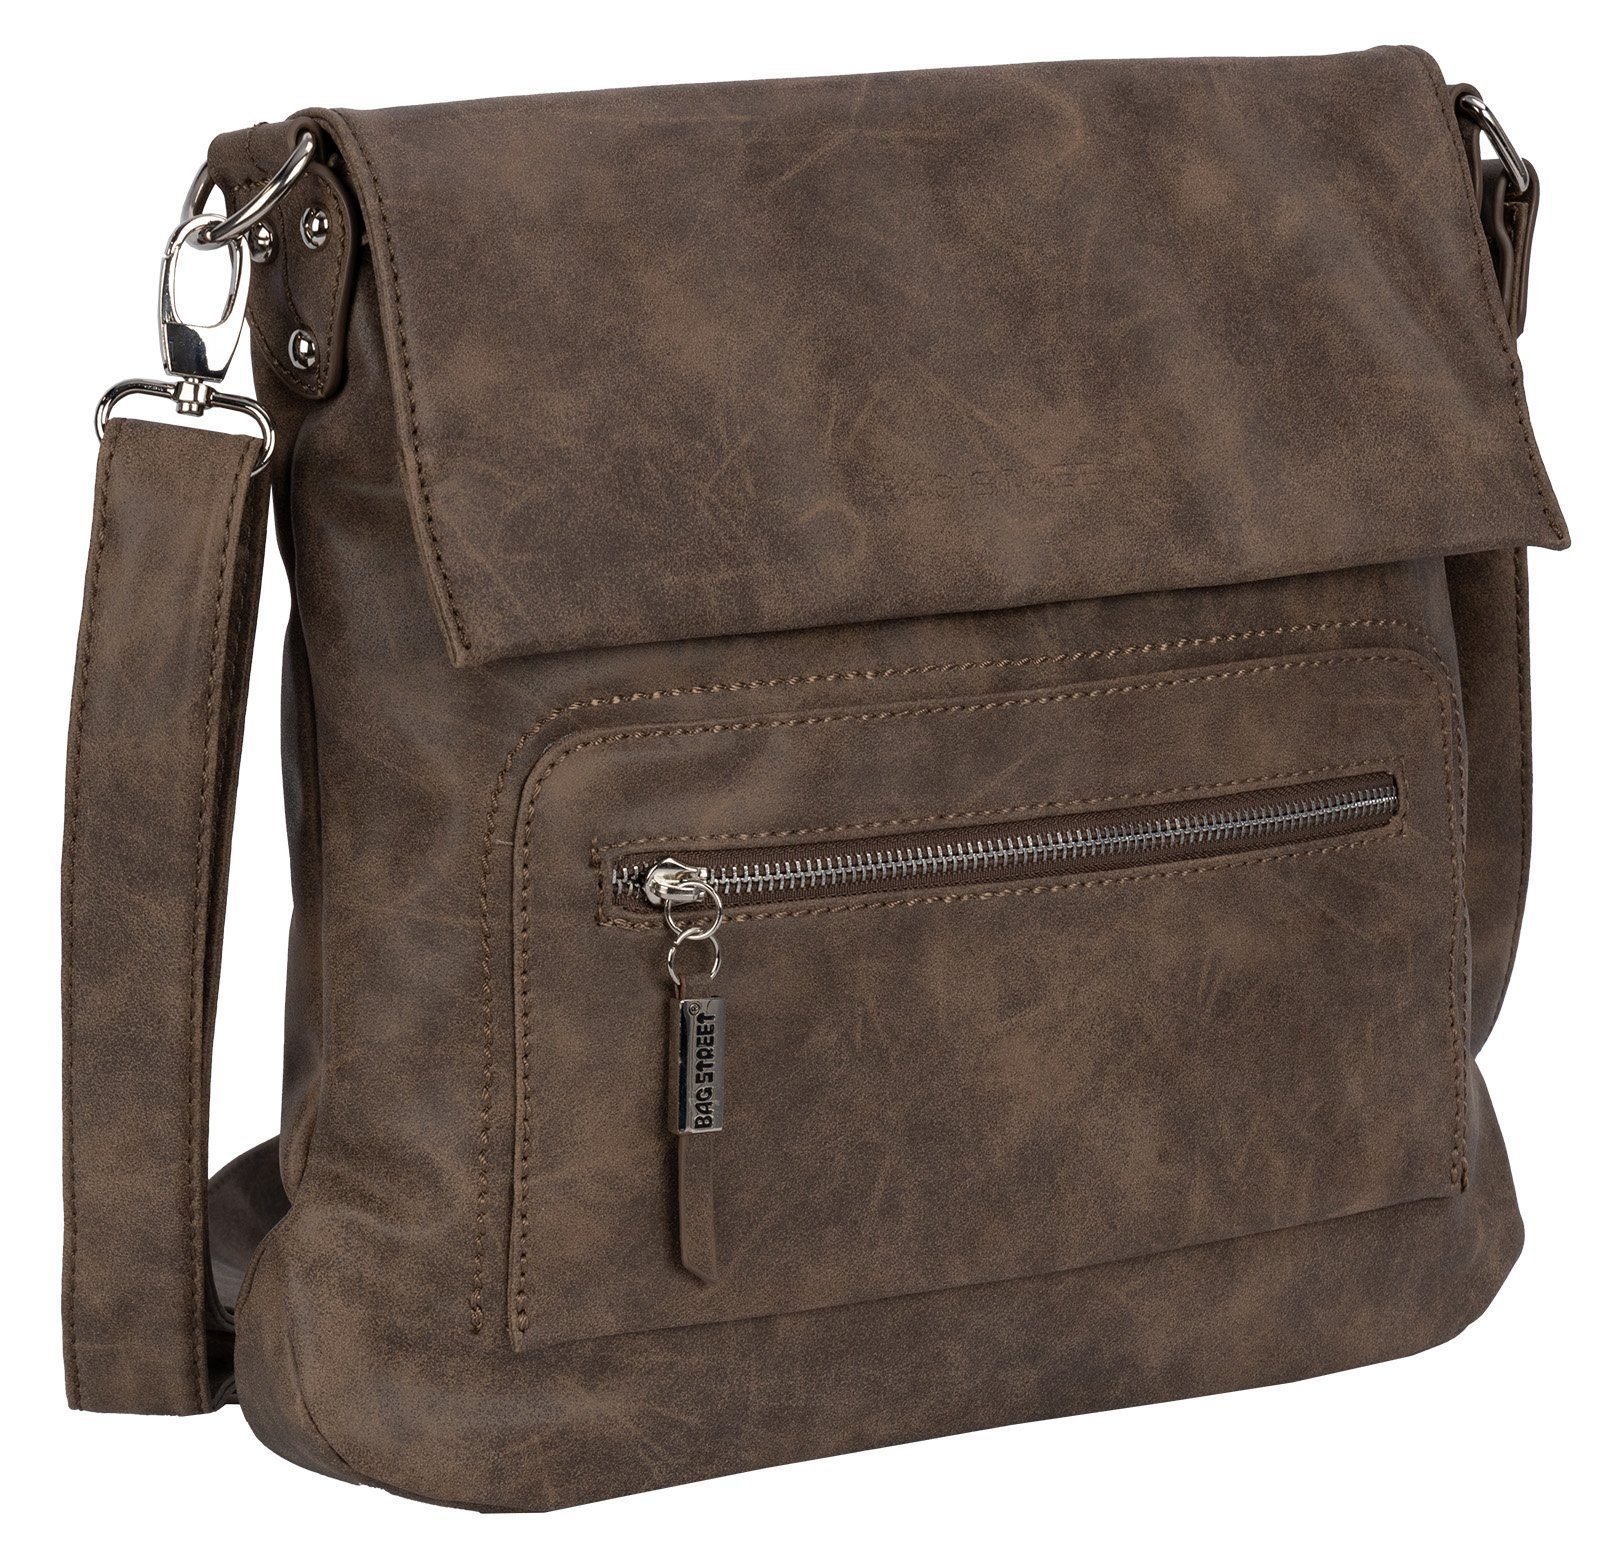 BAG STREET Schlüsseltasche Bag Street Damentasche Umhängetasche Handtasche Schultertasche T0103, als Schultertasche, Umhängetasche tragbar BRAUN